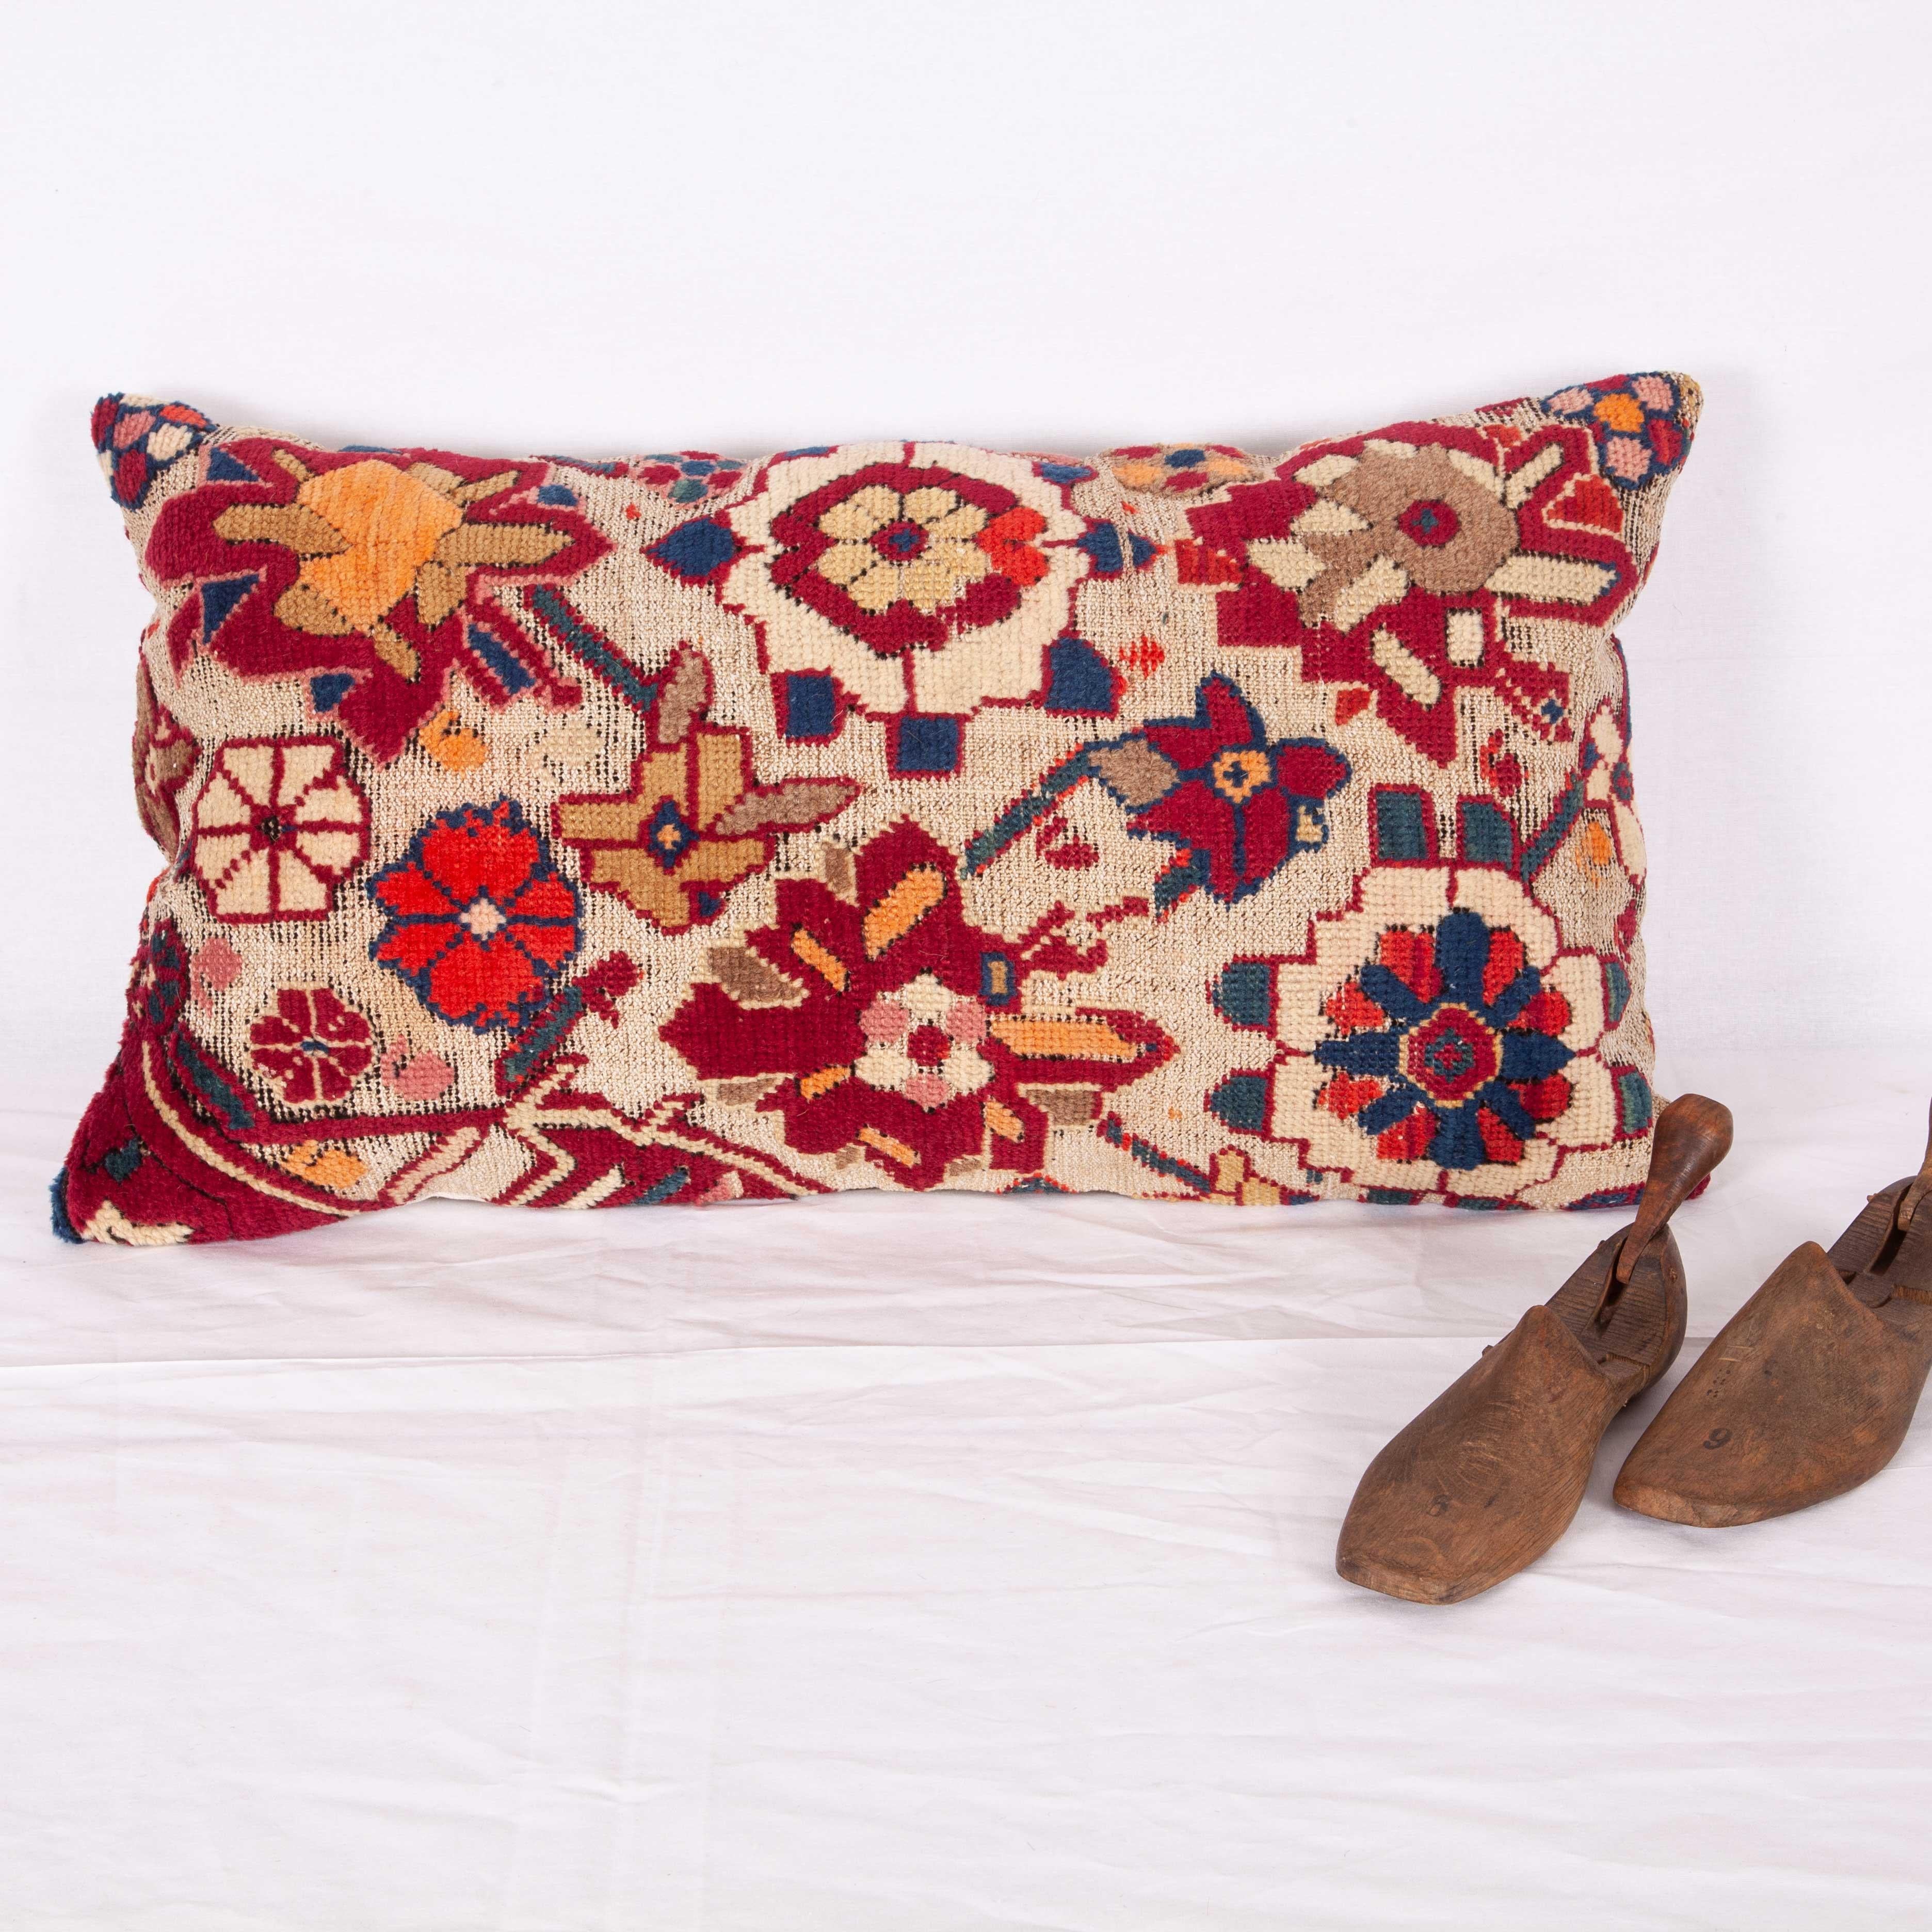 Antique Cushion / Pillow Case Fashioned from an Armenian Shusha Rug (Handgewebt)